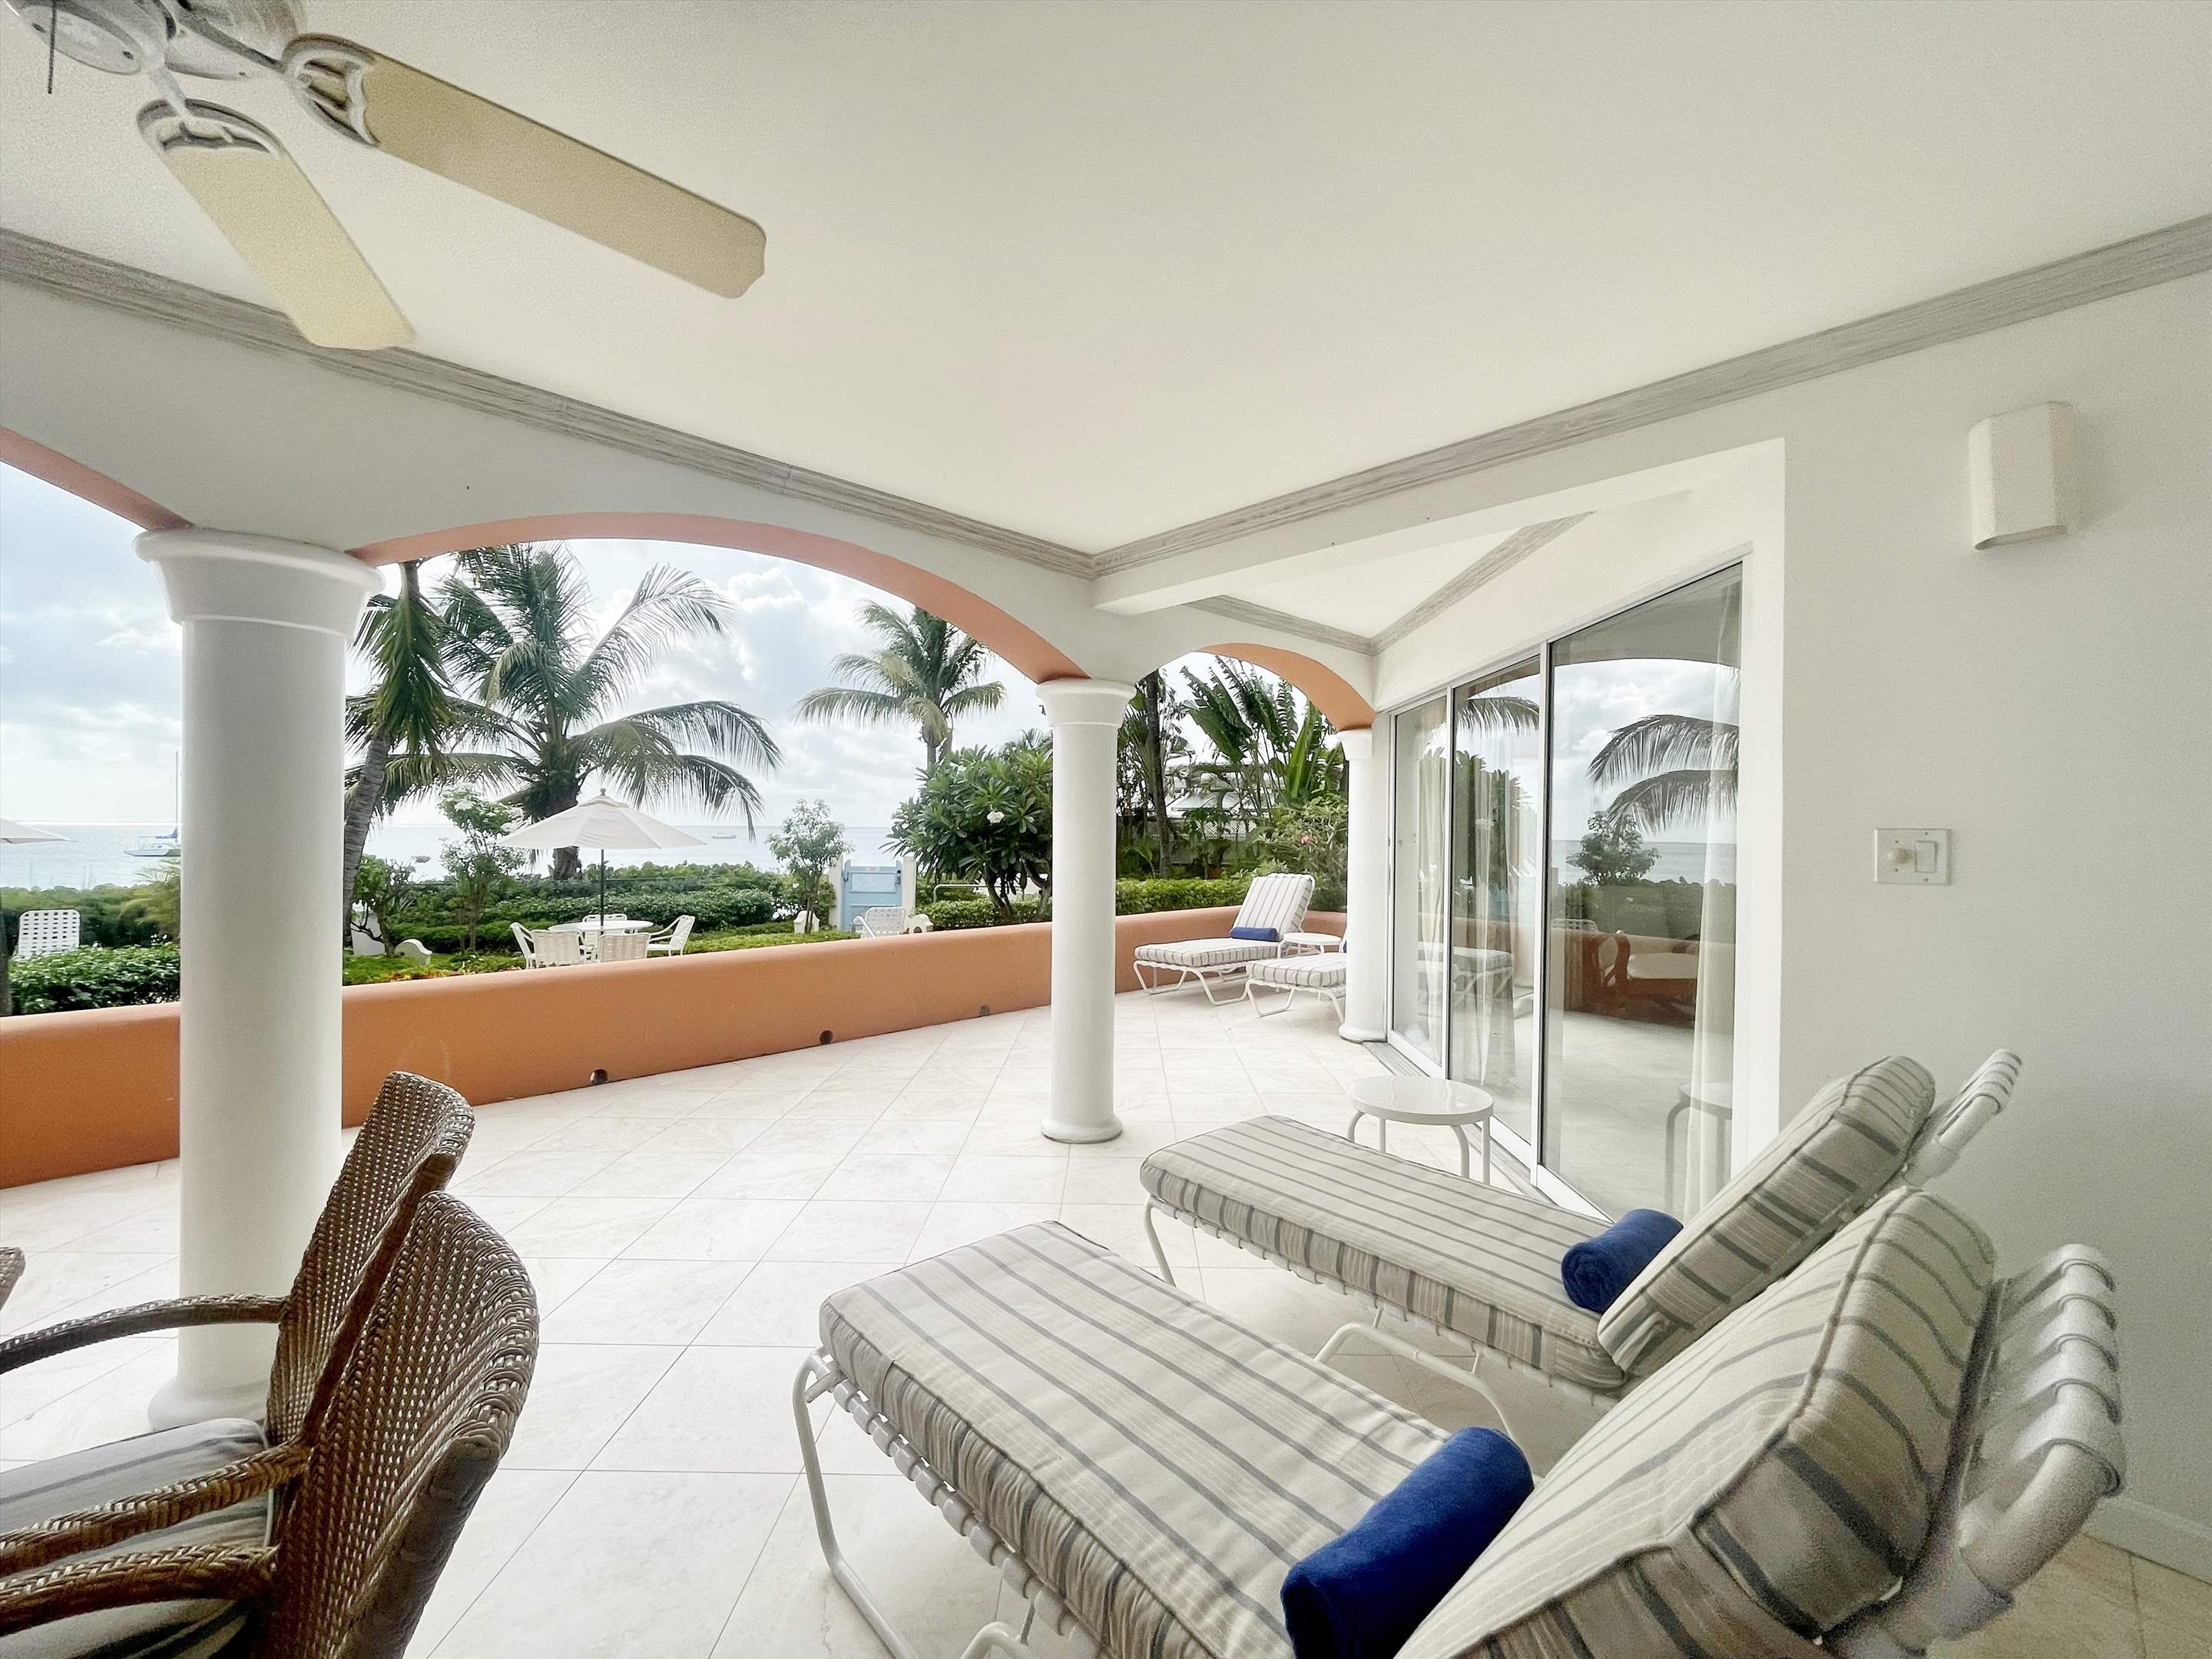 Villas on the Beach 103, 2 bedroom, 2 bedroom apartment in St. James & West Coast, Barbados Photo #3